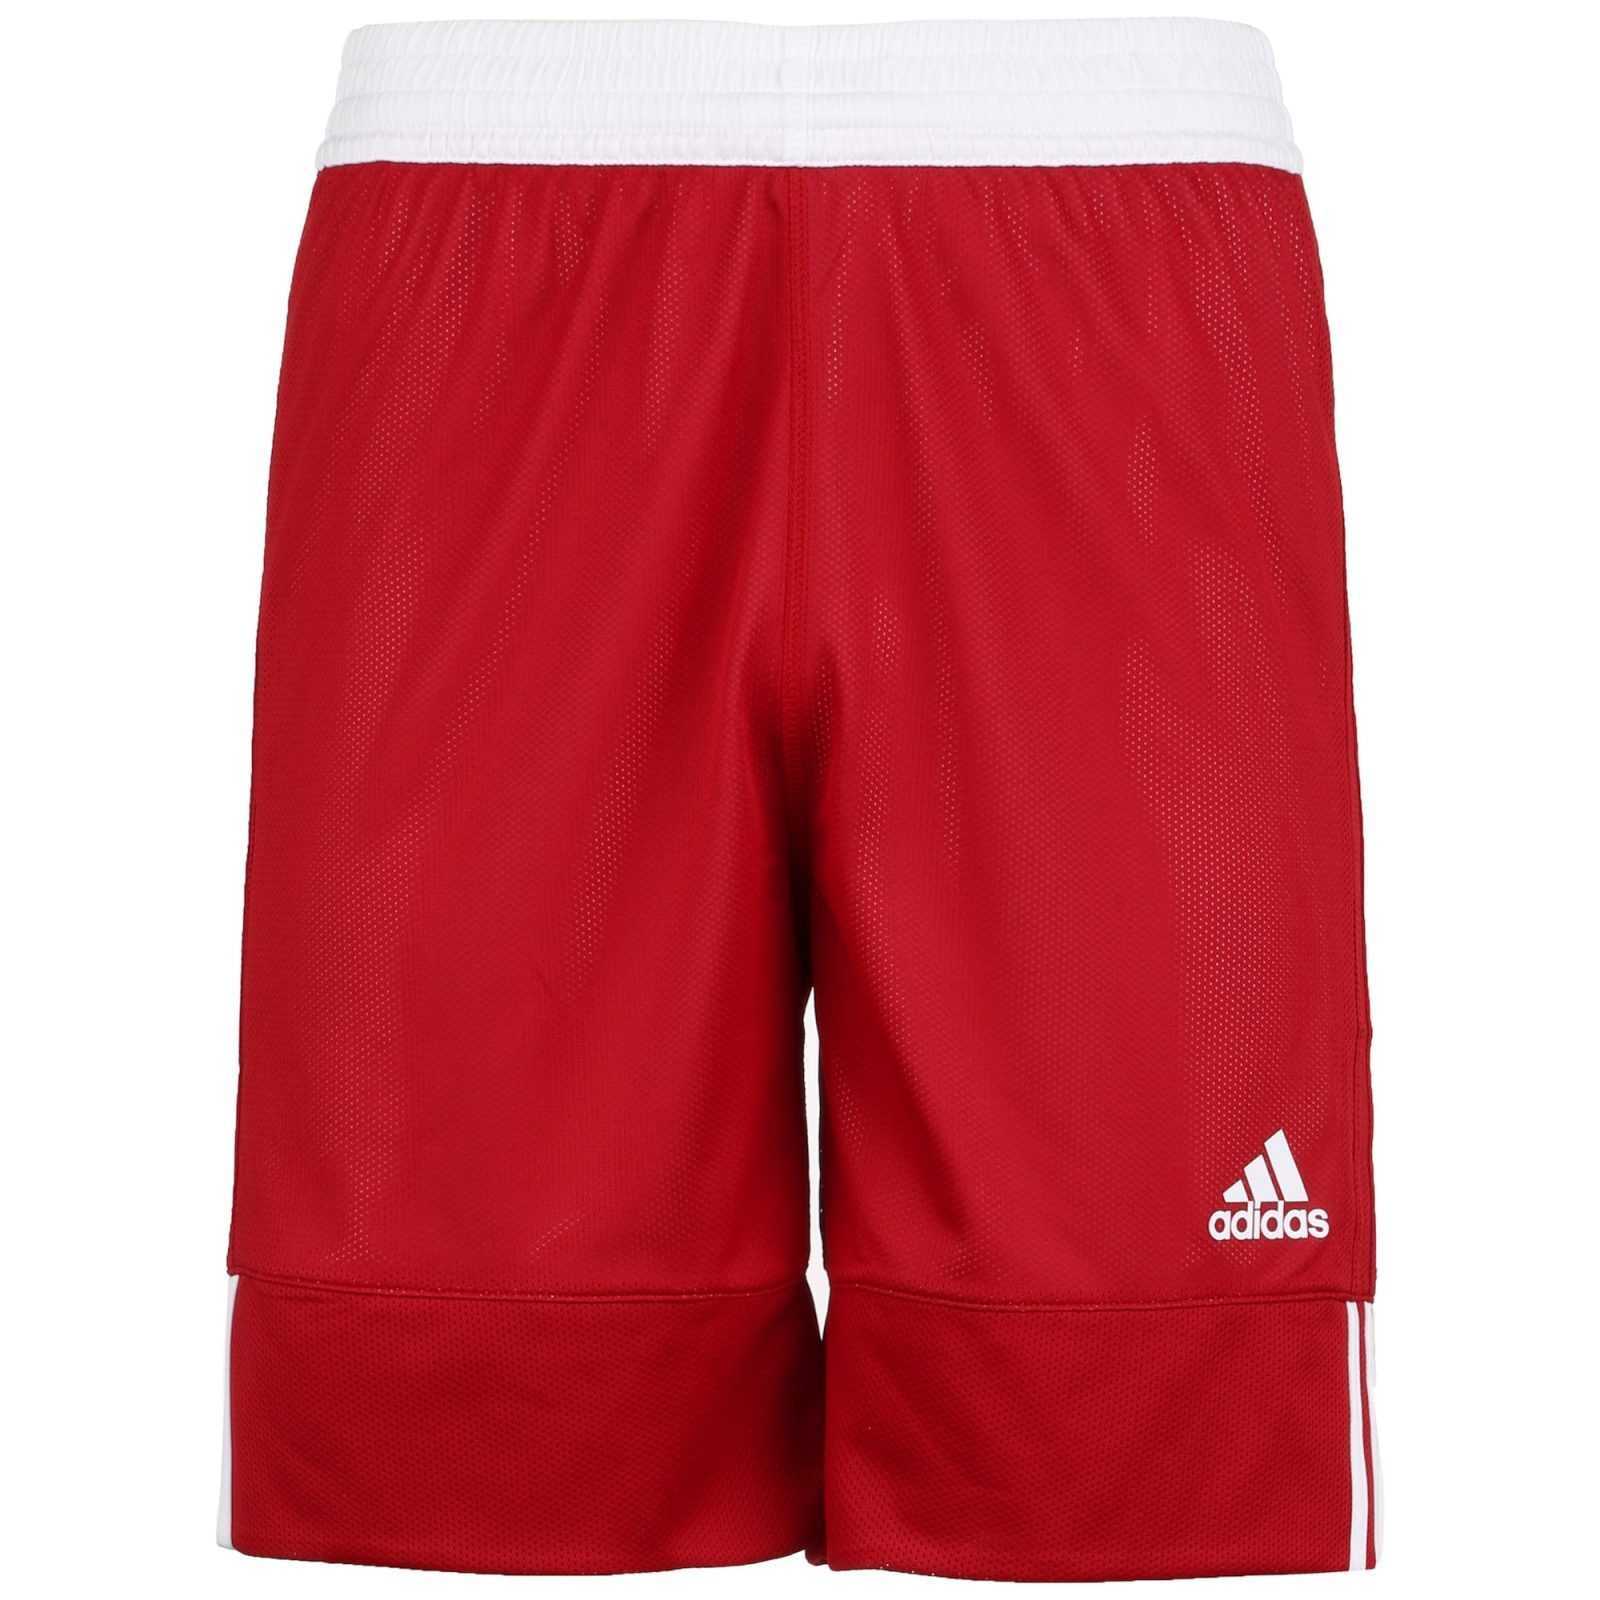 ADIDAS PERFORMANCE Športne hlače  rdeča / bela